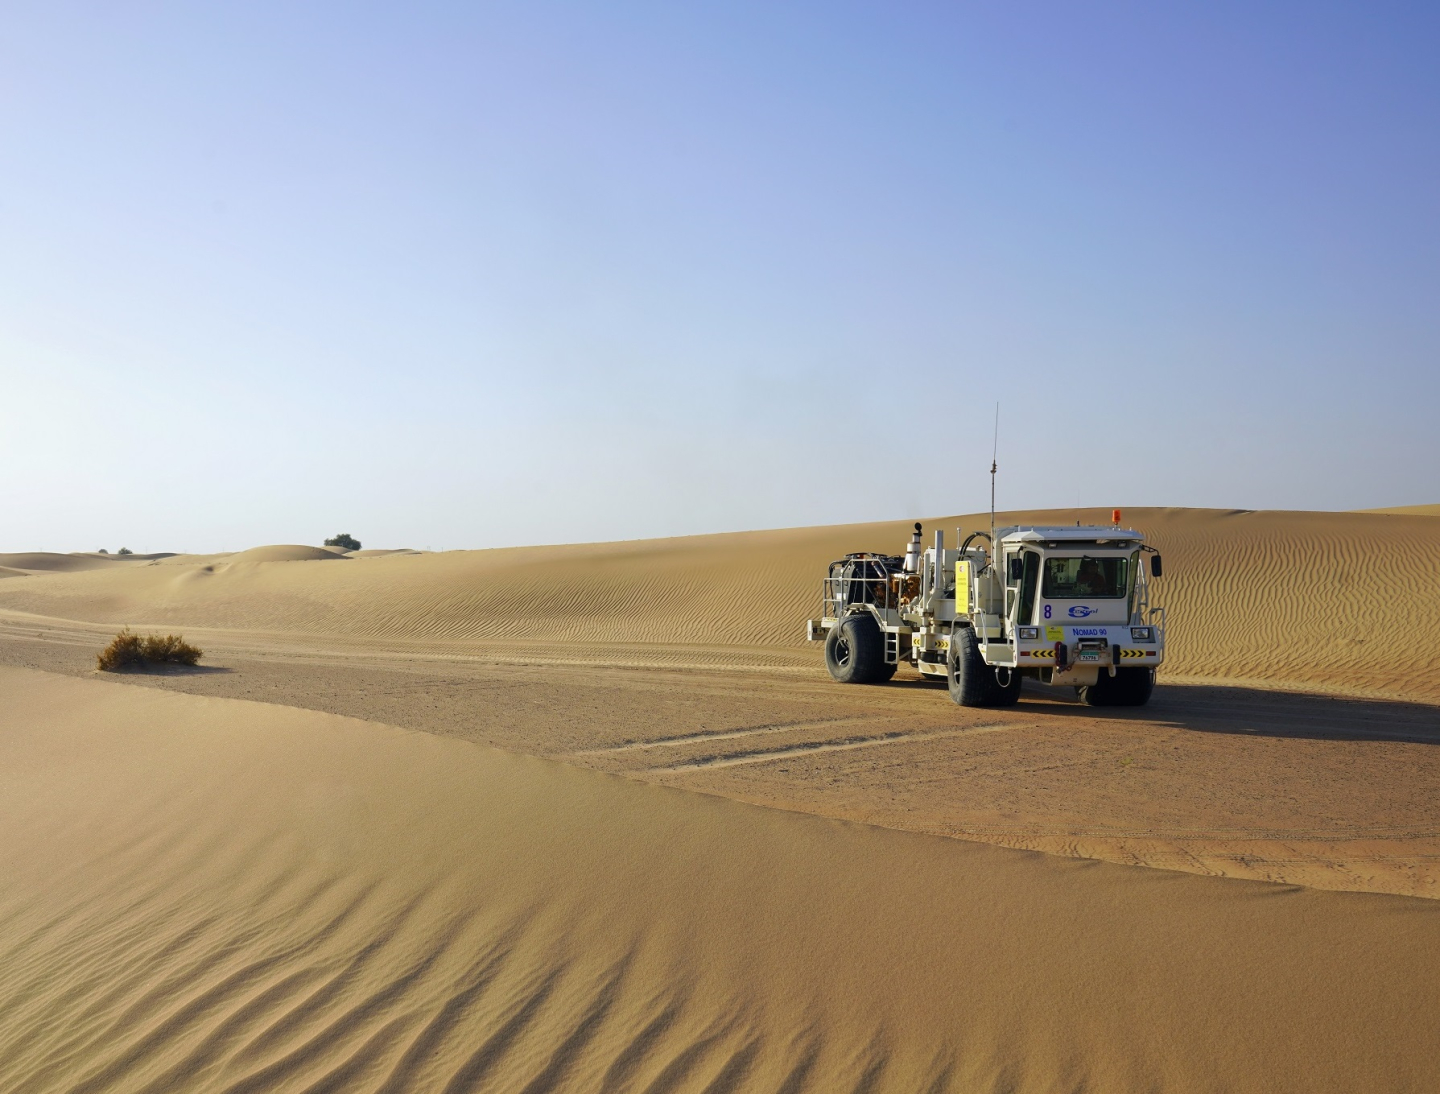 Nomad dry land sand 